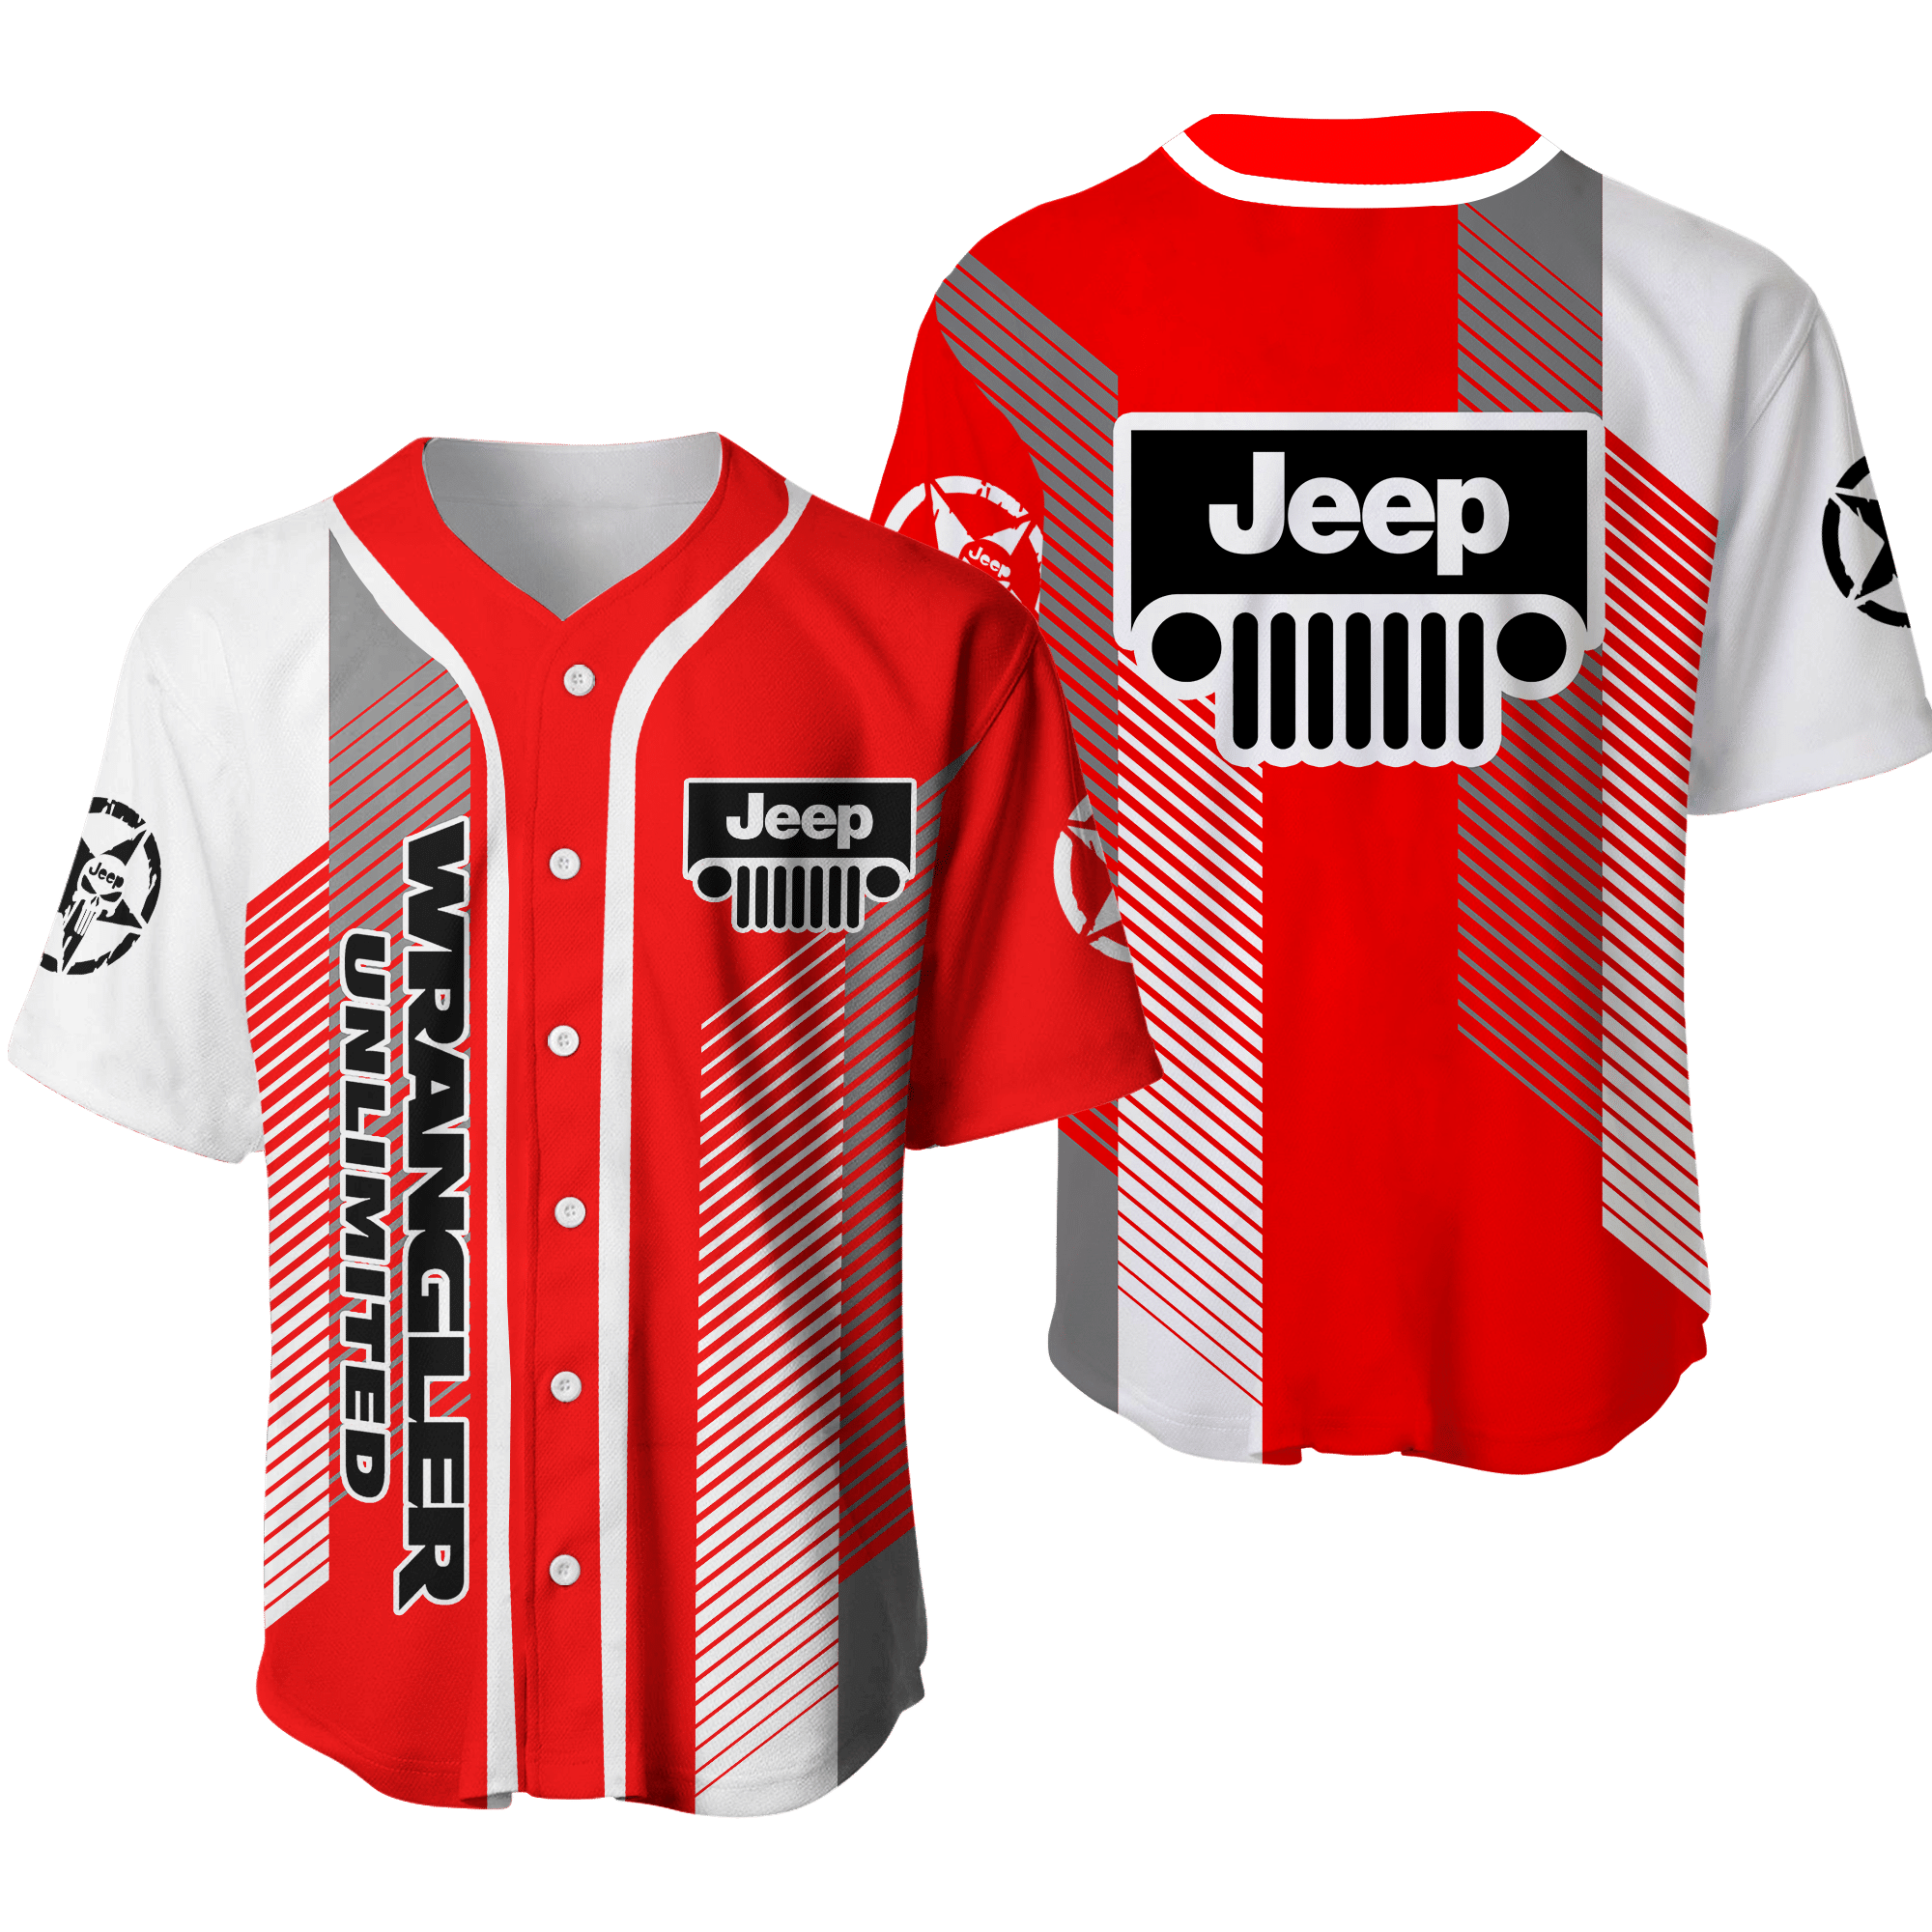 3D Printed Jeep Wrangler Dvt-Hl Men’S Round Collar T-Shirt Ver 1 (Red)